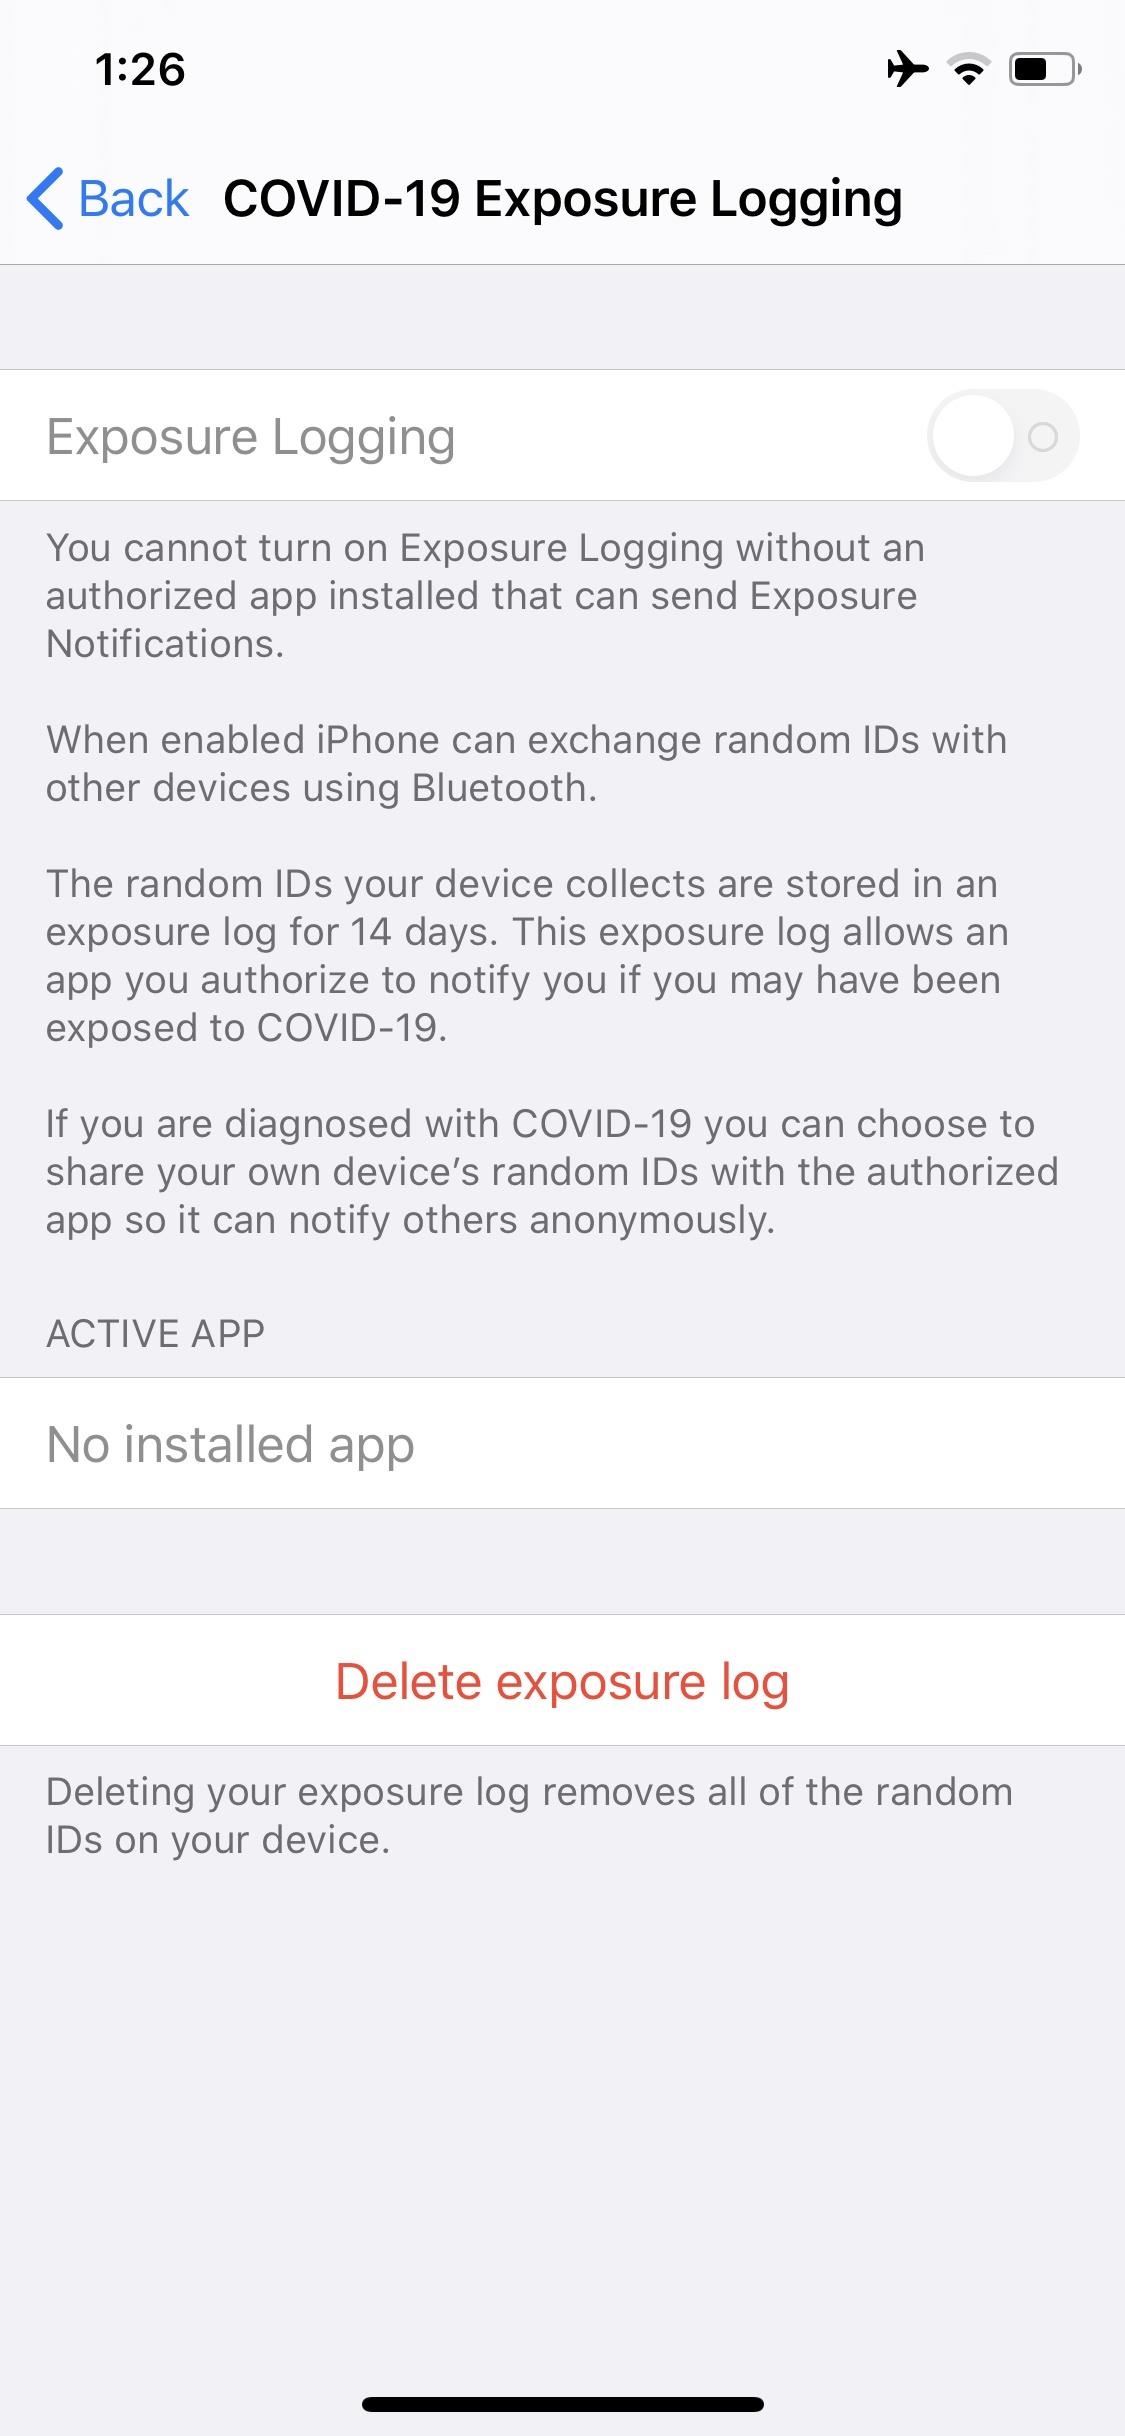 Apple's iOS 13.5 Public Beta 3 for iPhone Introduces Updated COVID-19 Exposure Logging Settings